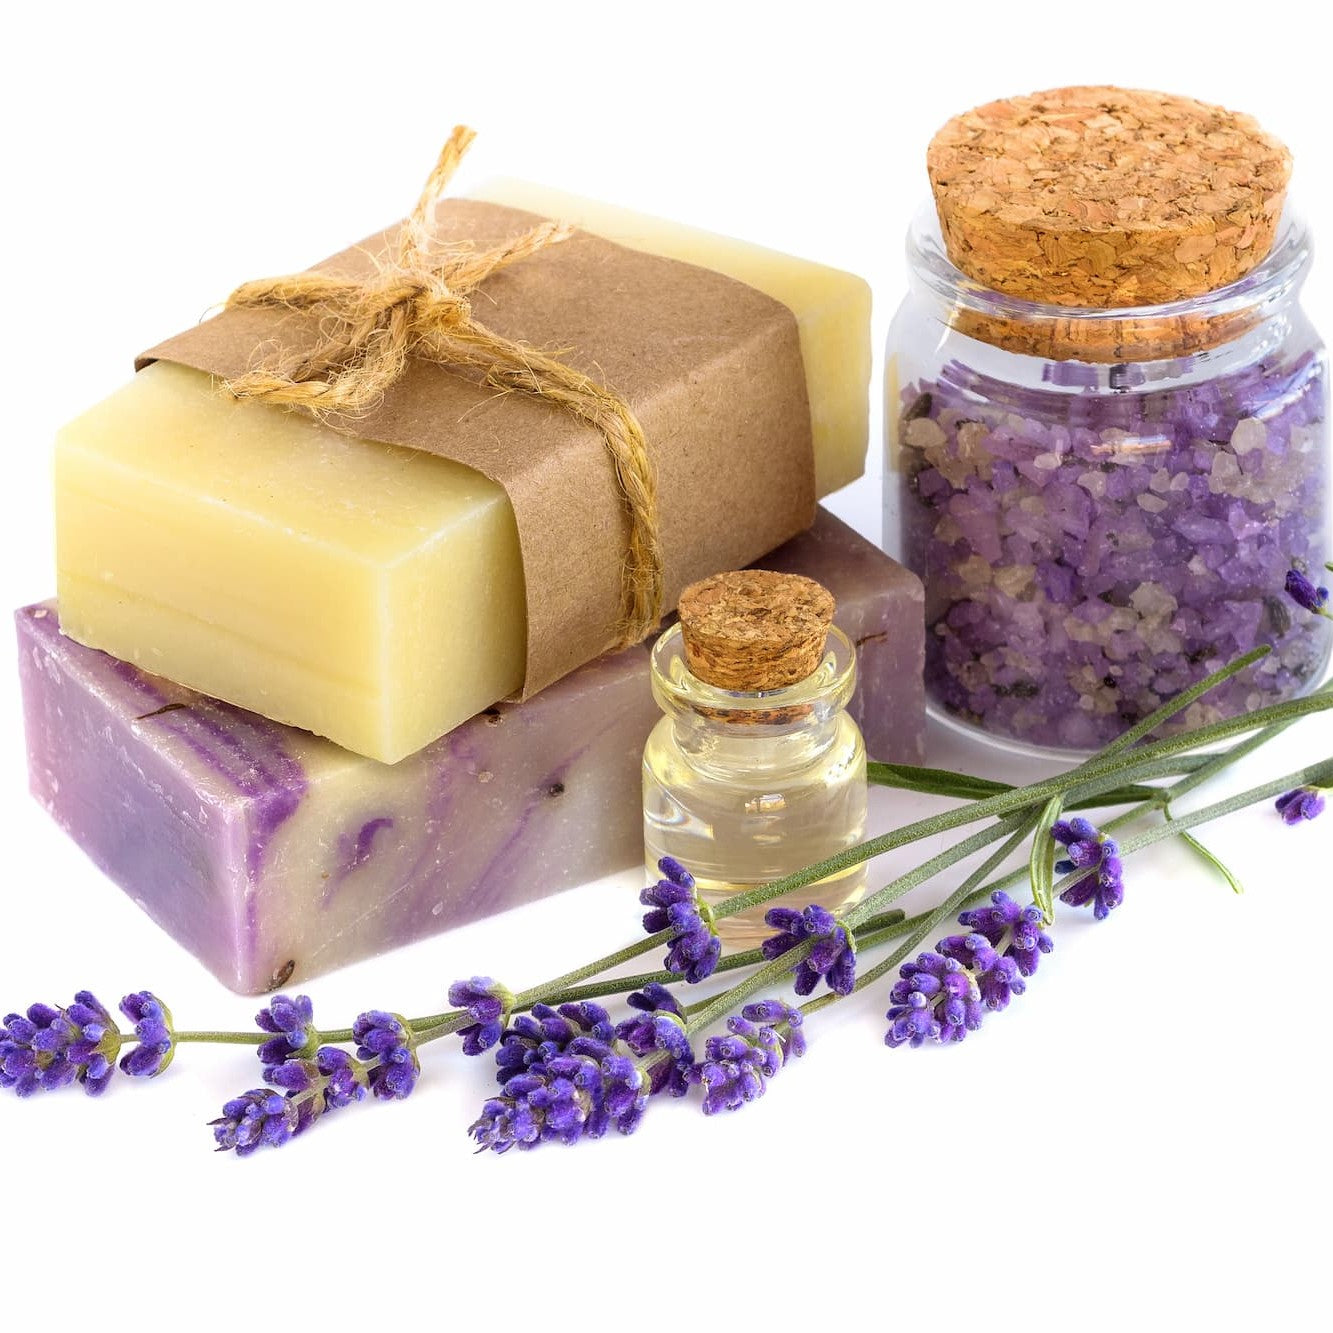 Lavender Flower Buds #1 - Uses - Culinary & Crafting - 4oz Bag